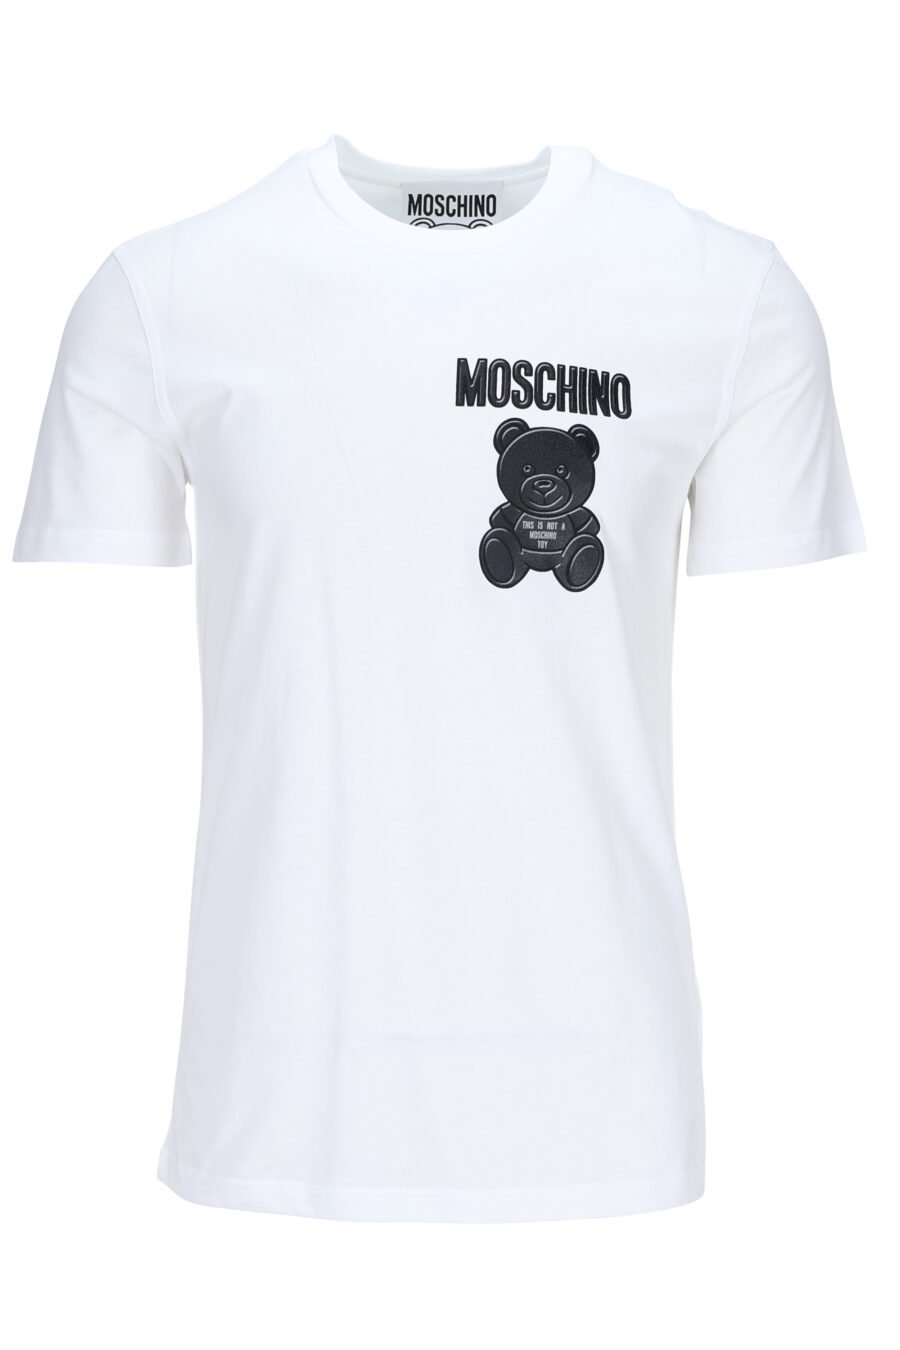 Camiseta blanca con algodón eco con minilogo negro "teddy" - 889316853131